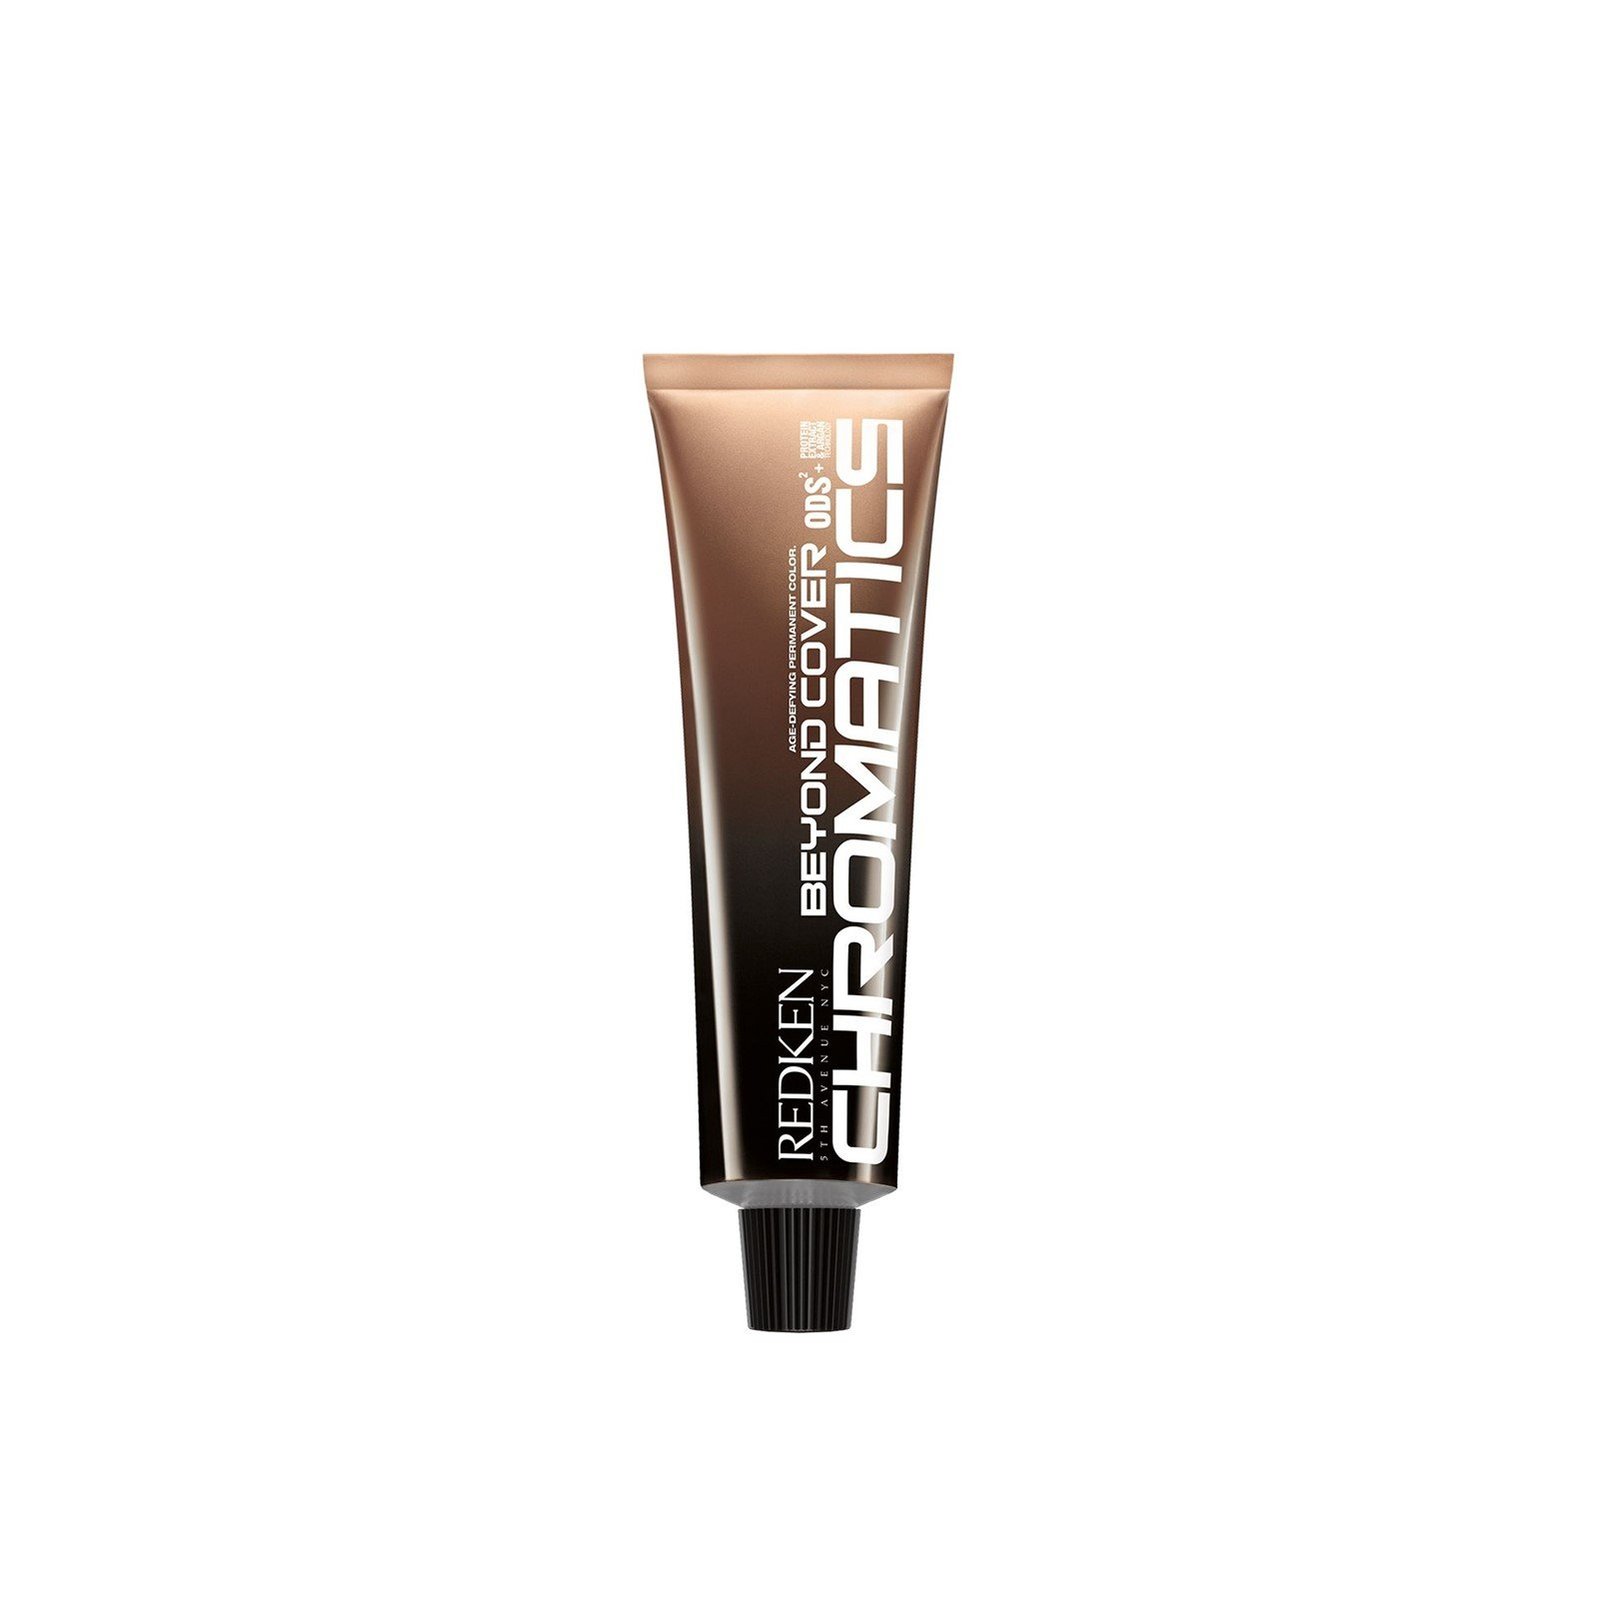 Redken Chromatics Beyond Cover Permanent Hair Dye 5GB Gold Beige 56.7g (2 oz)